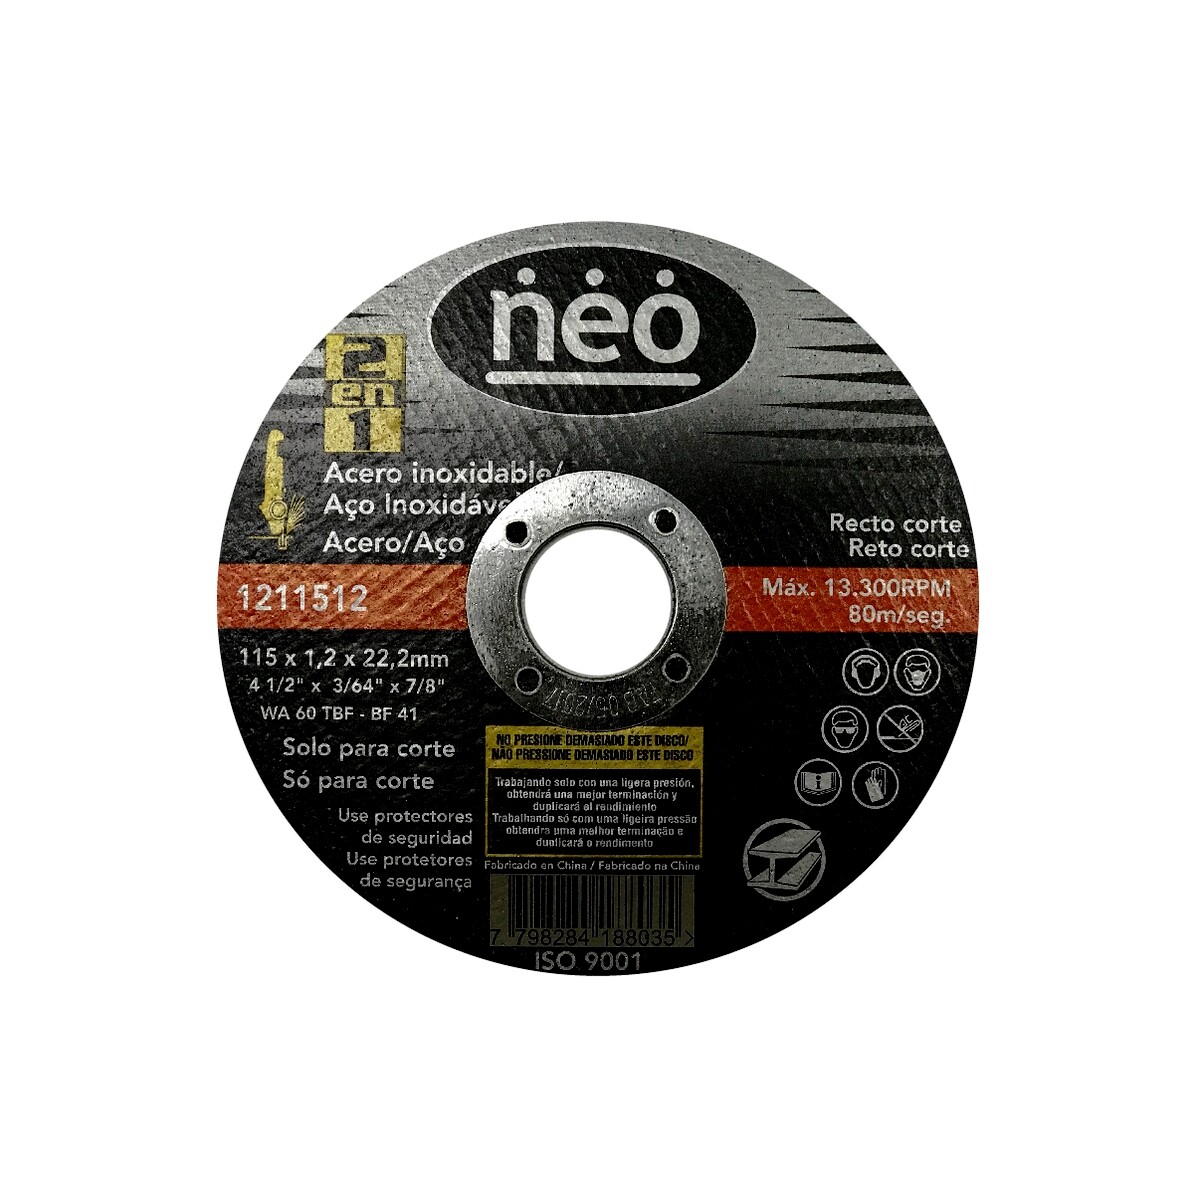 Disco Neo corte inox. 1.2/1.6mm 4.1/2" 